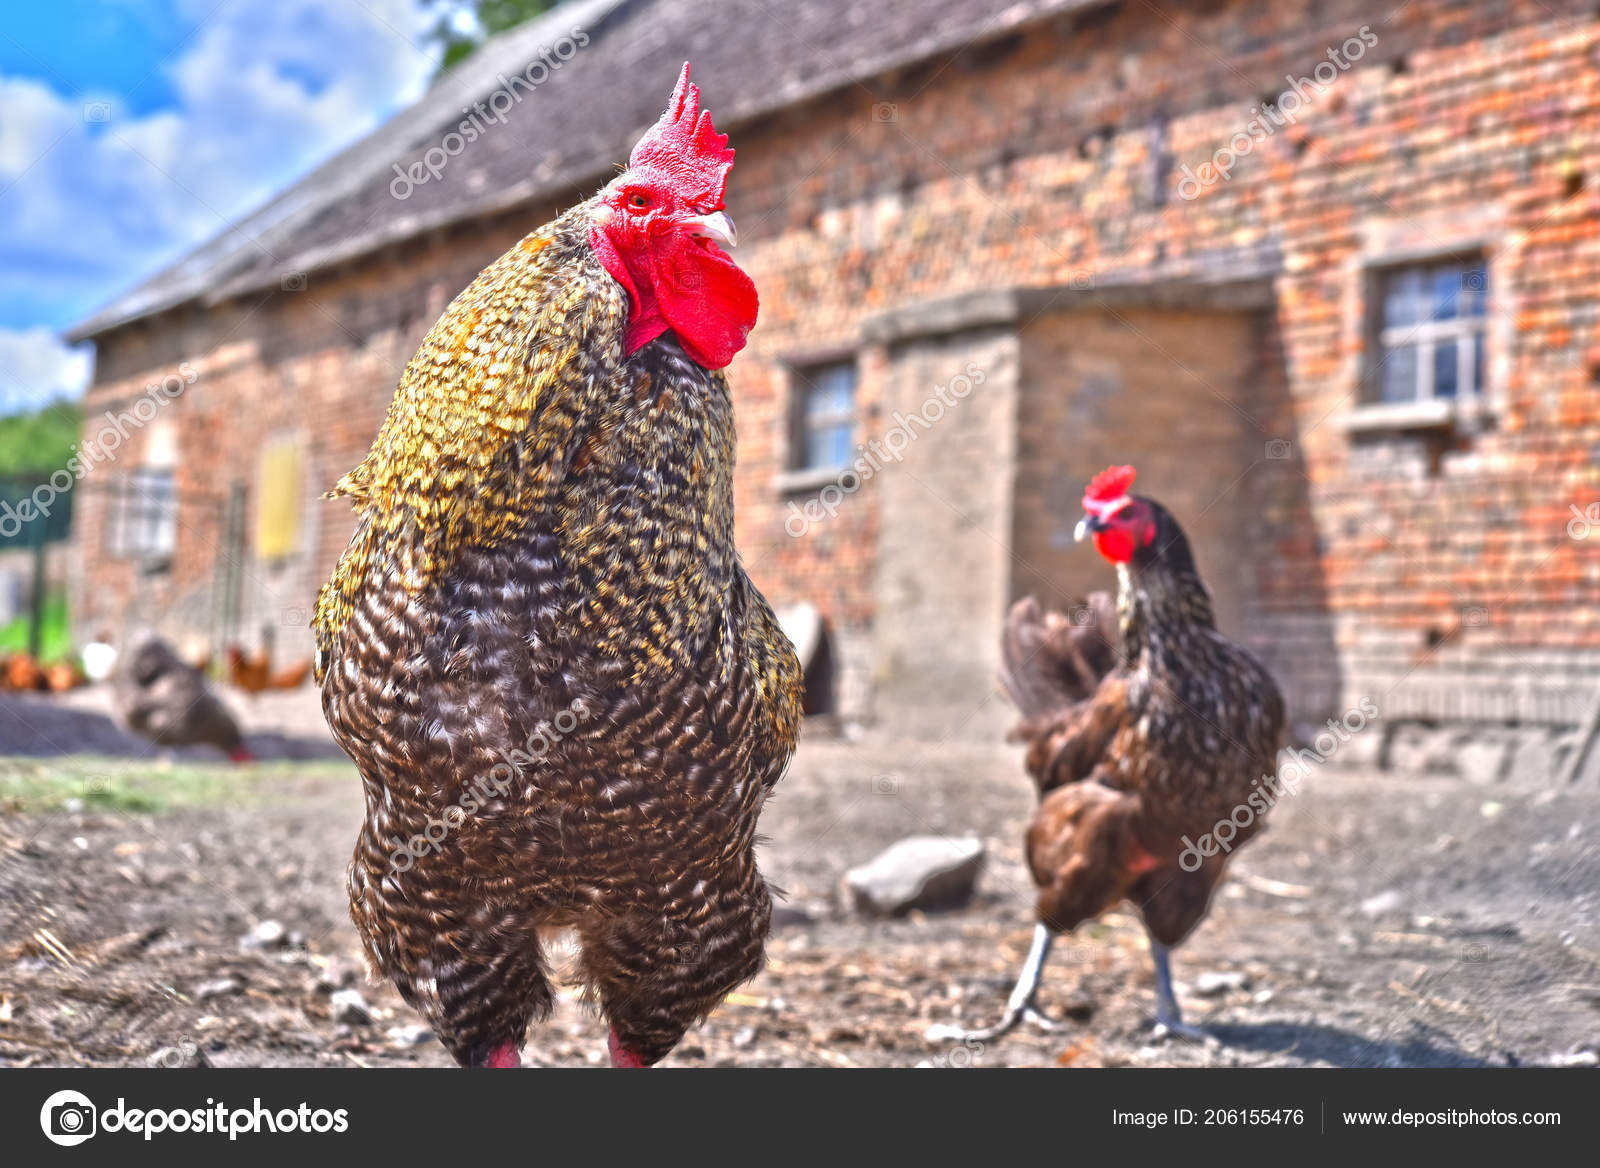 kuřata s obrovským kohoutem